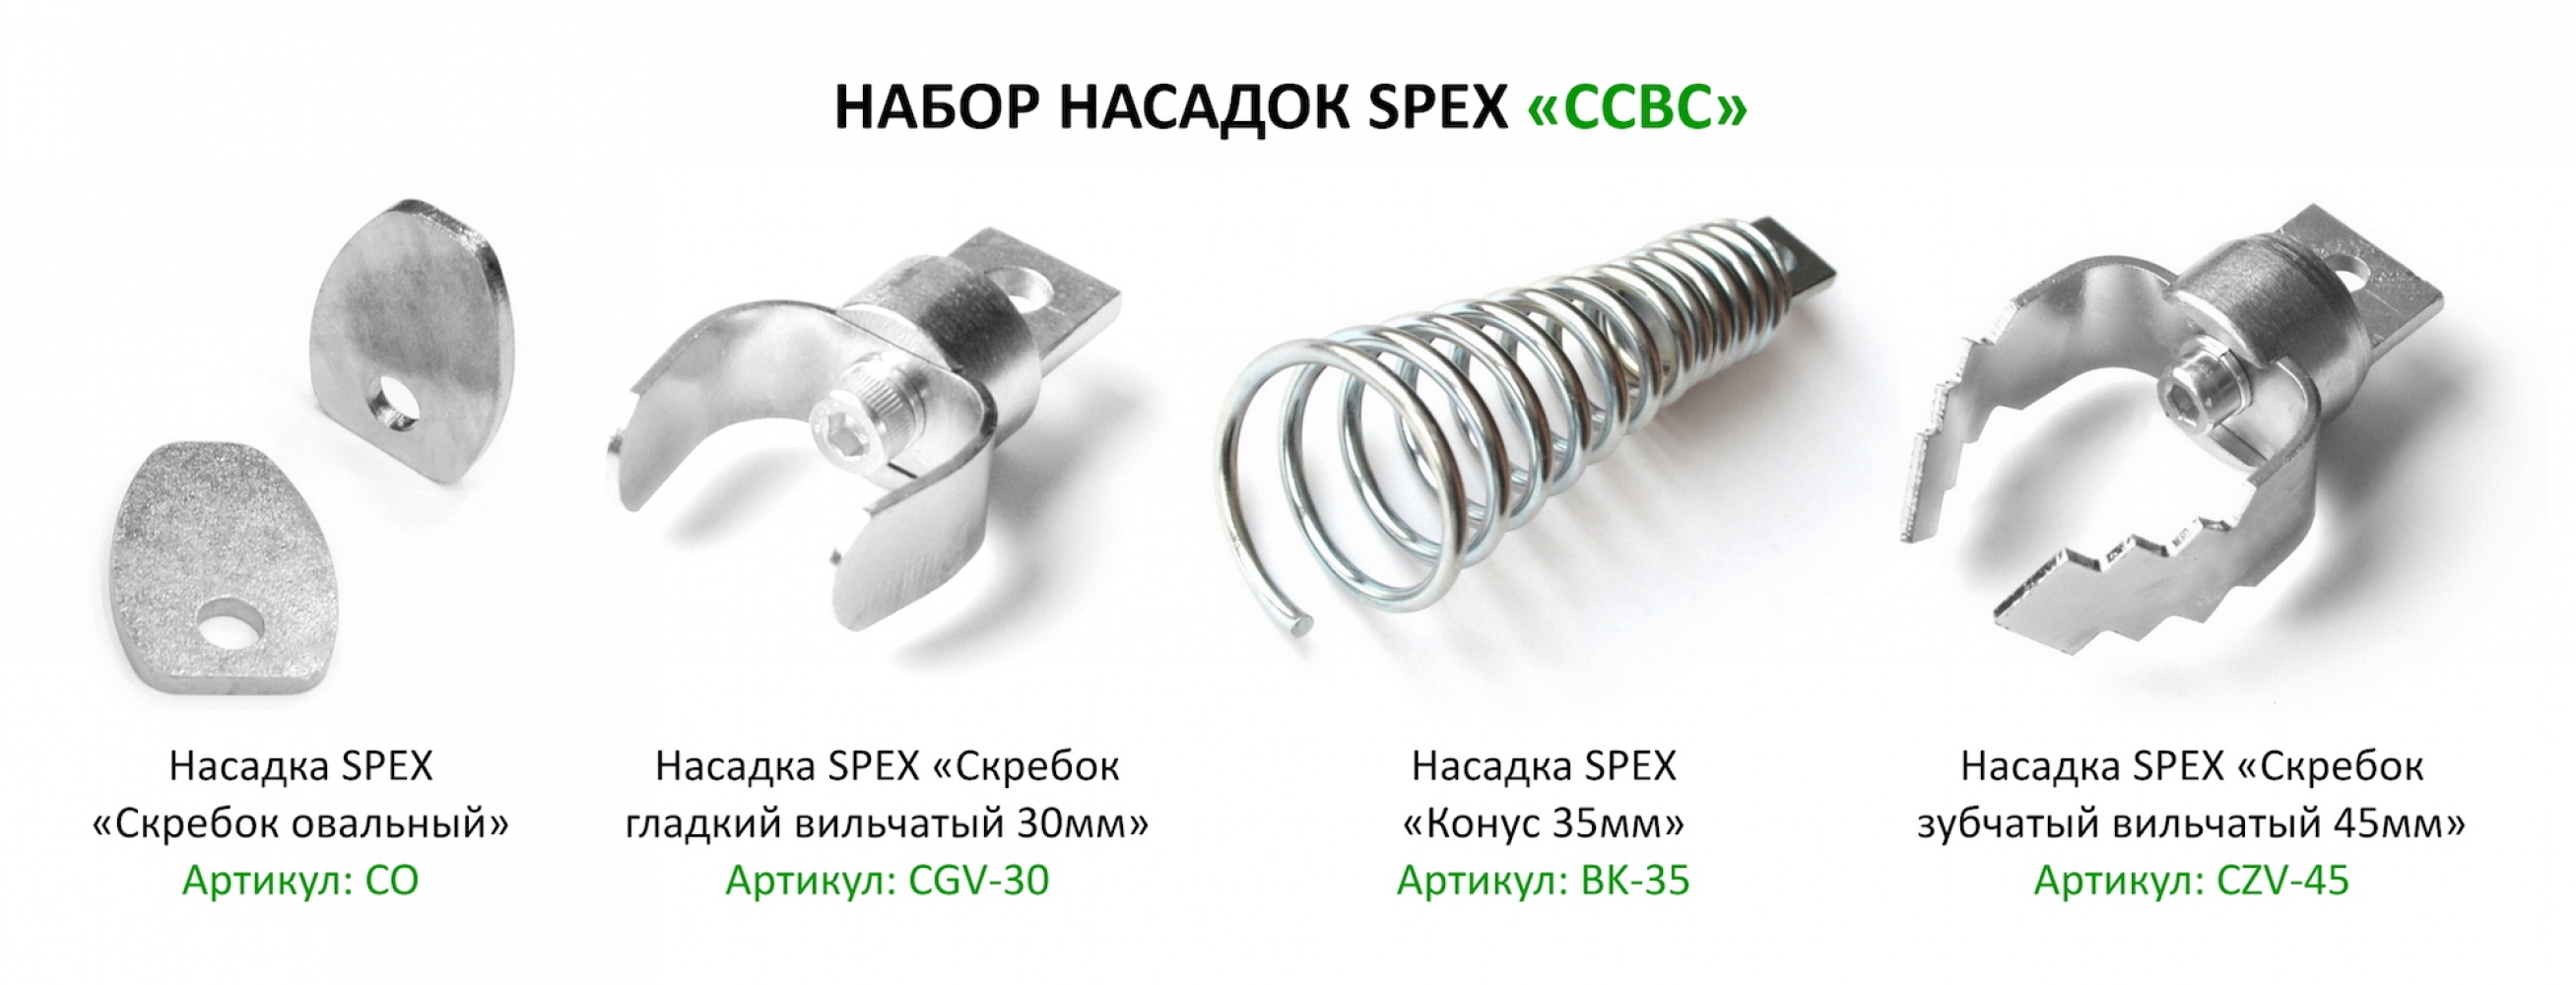  Набор насадок SPEX "CCBC" от компании Tectron